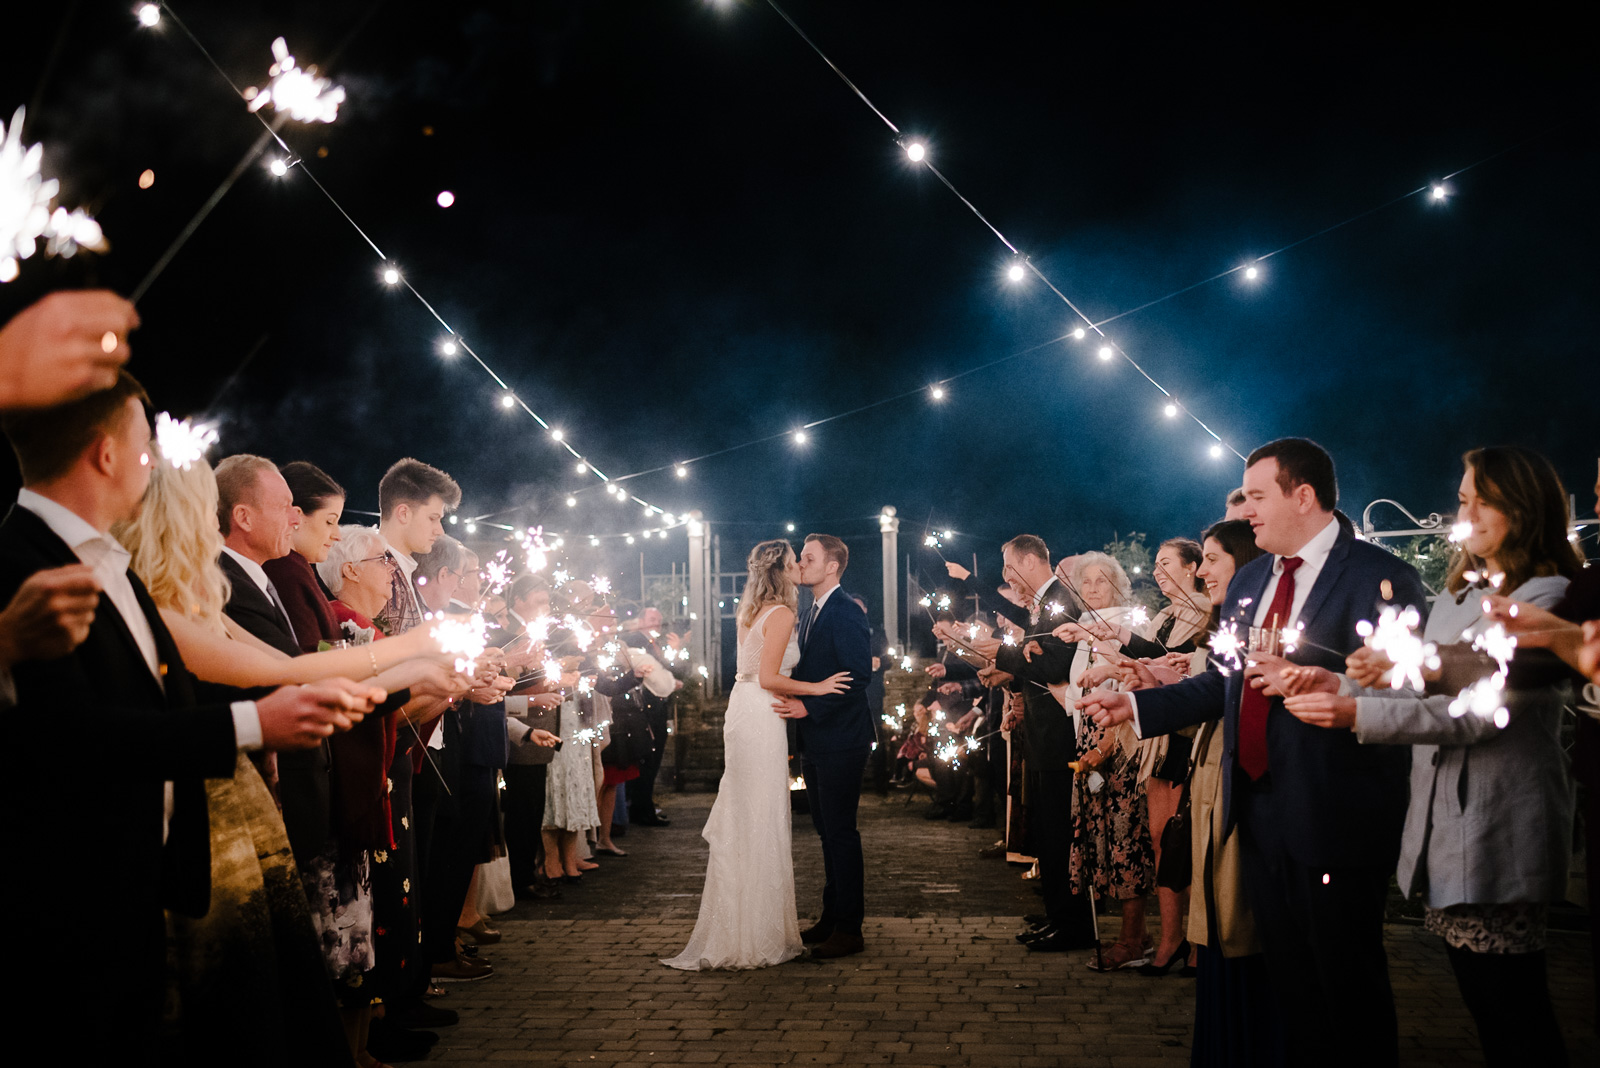 Relaxed Bride & Groom dance under festoon lighting at their Glove Factory Studio Wedding